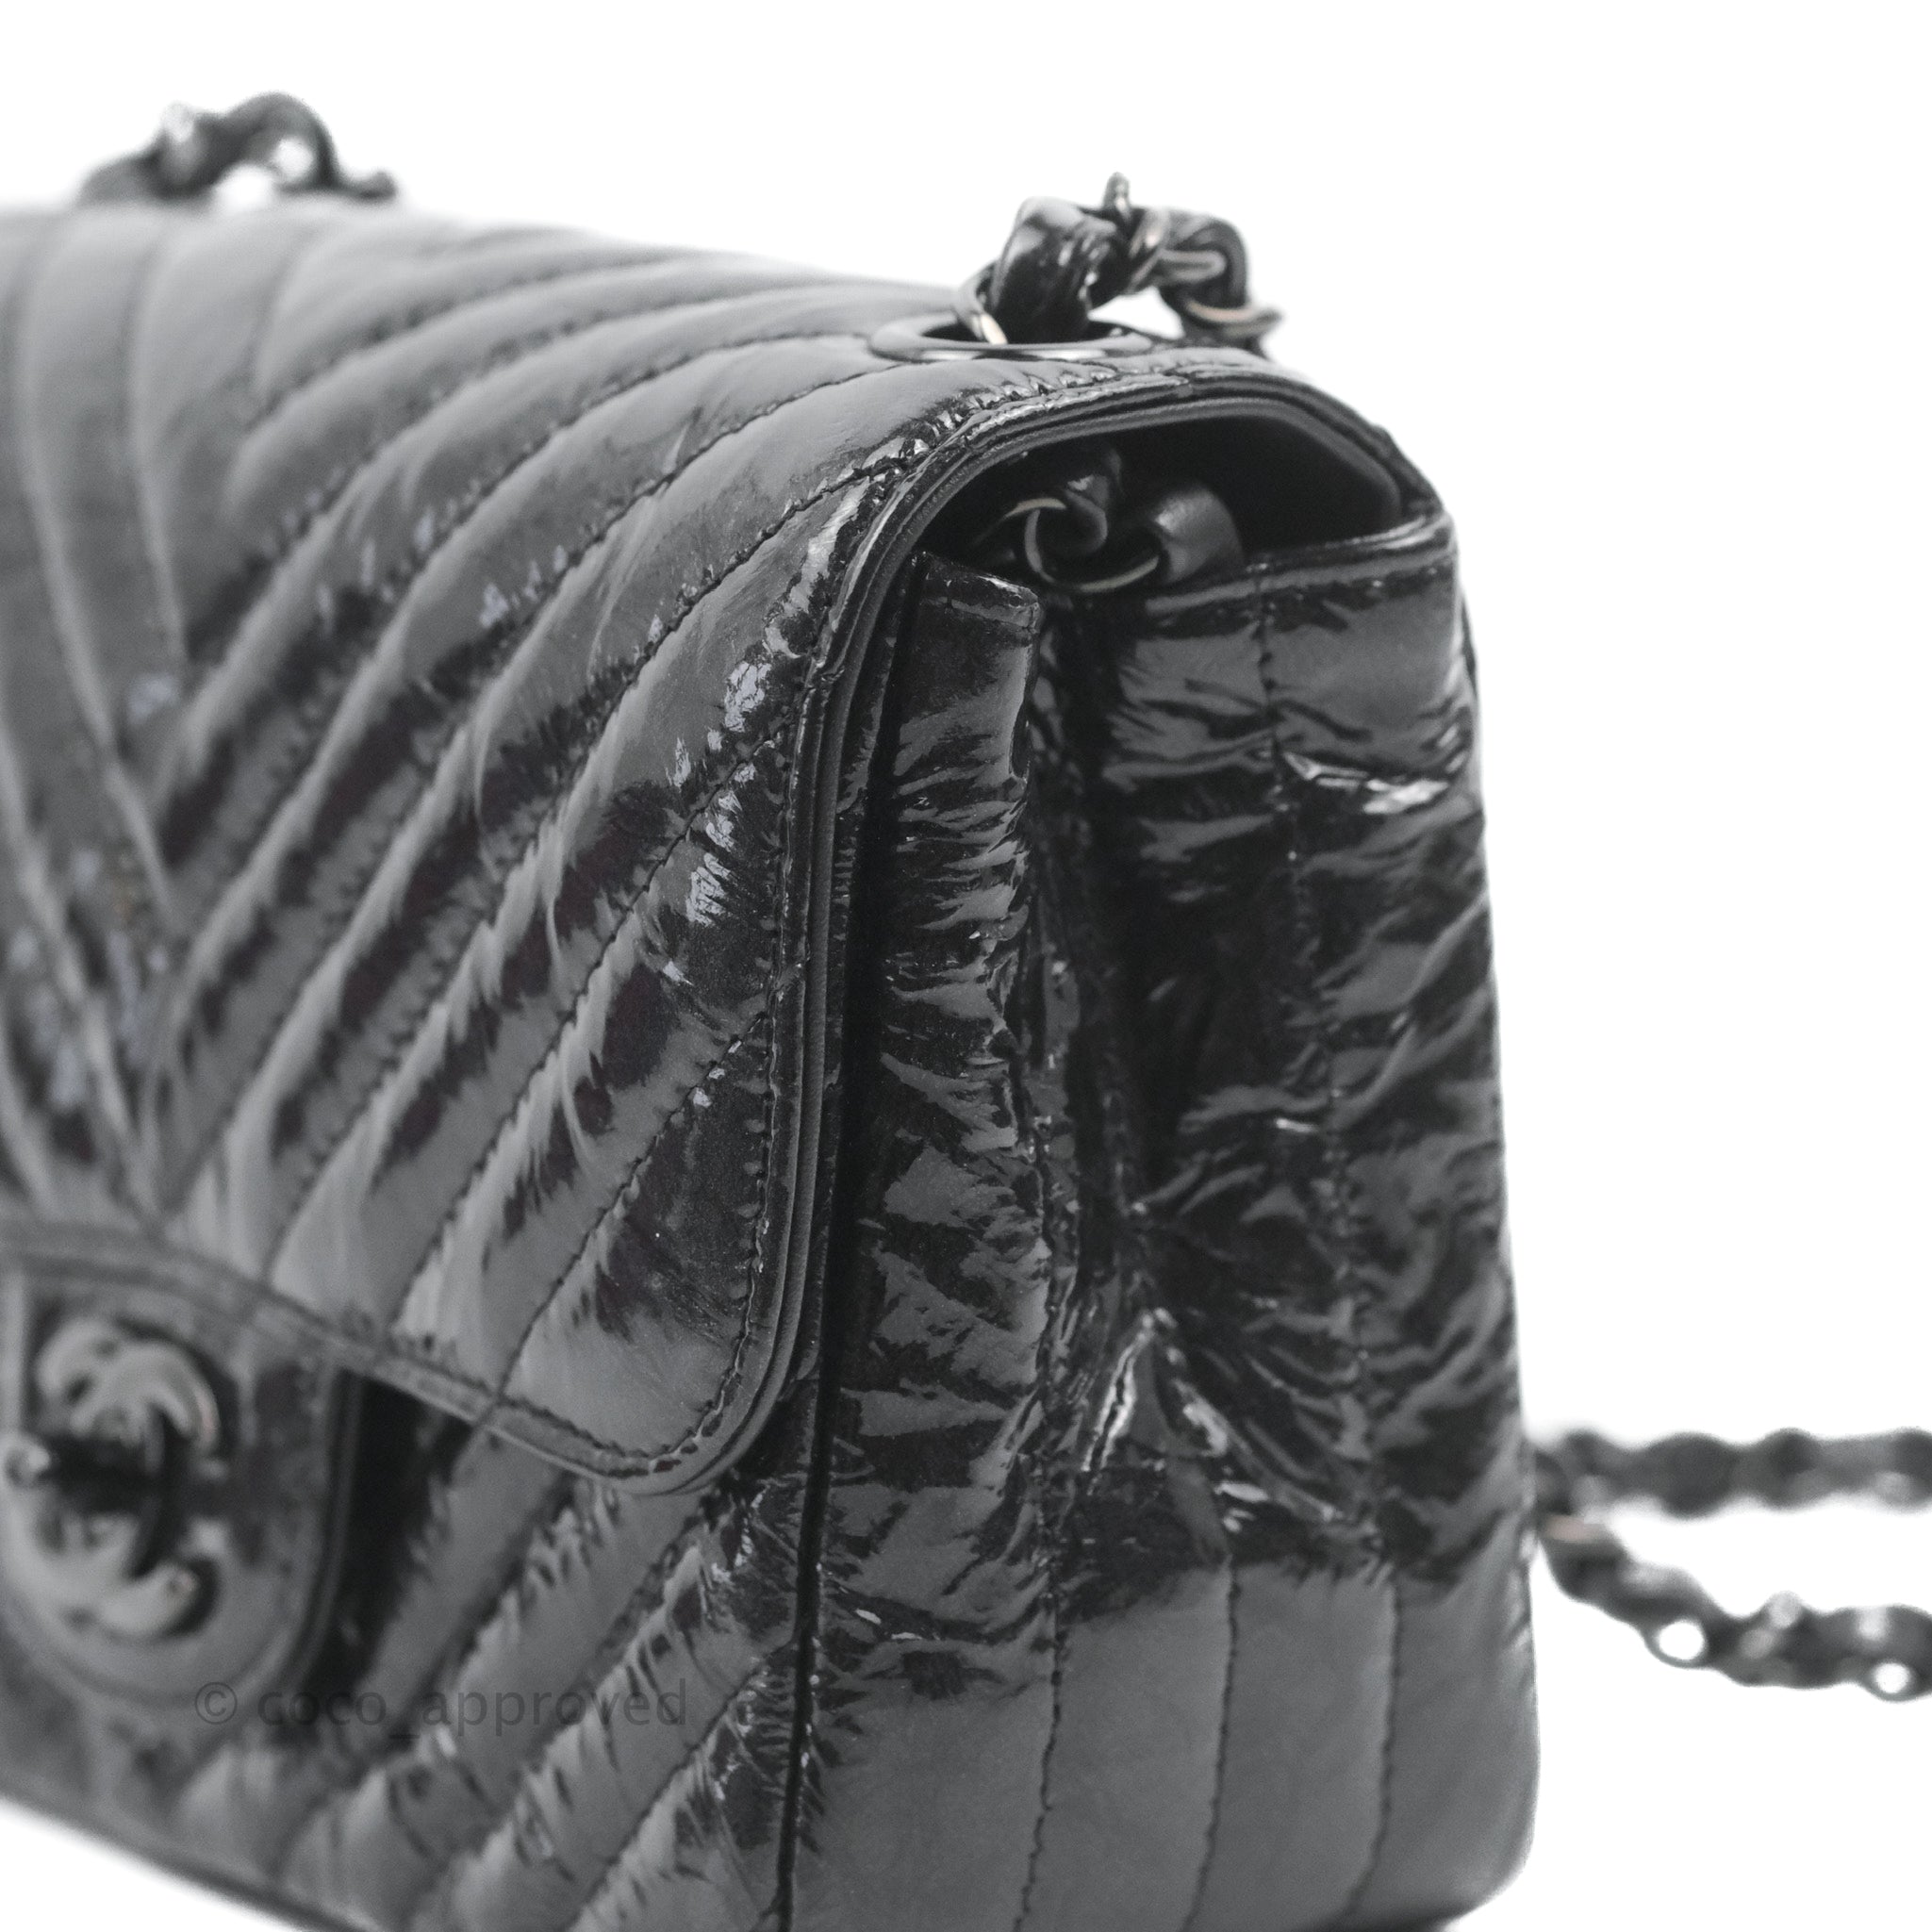 Black Chanel So Black Matelasse Patent Leather Single Flap Bag, Cra-wallonieShops Revival